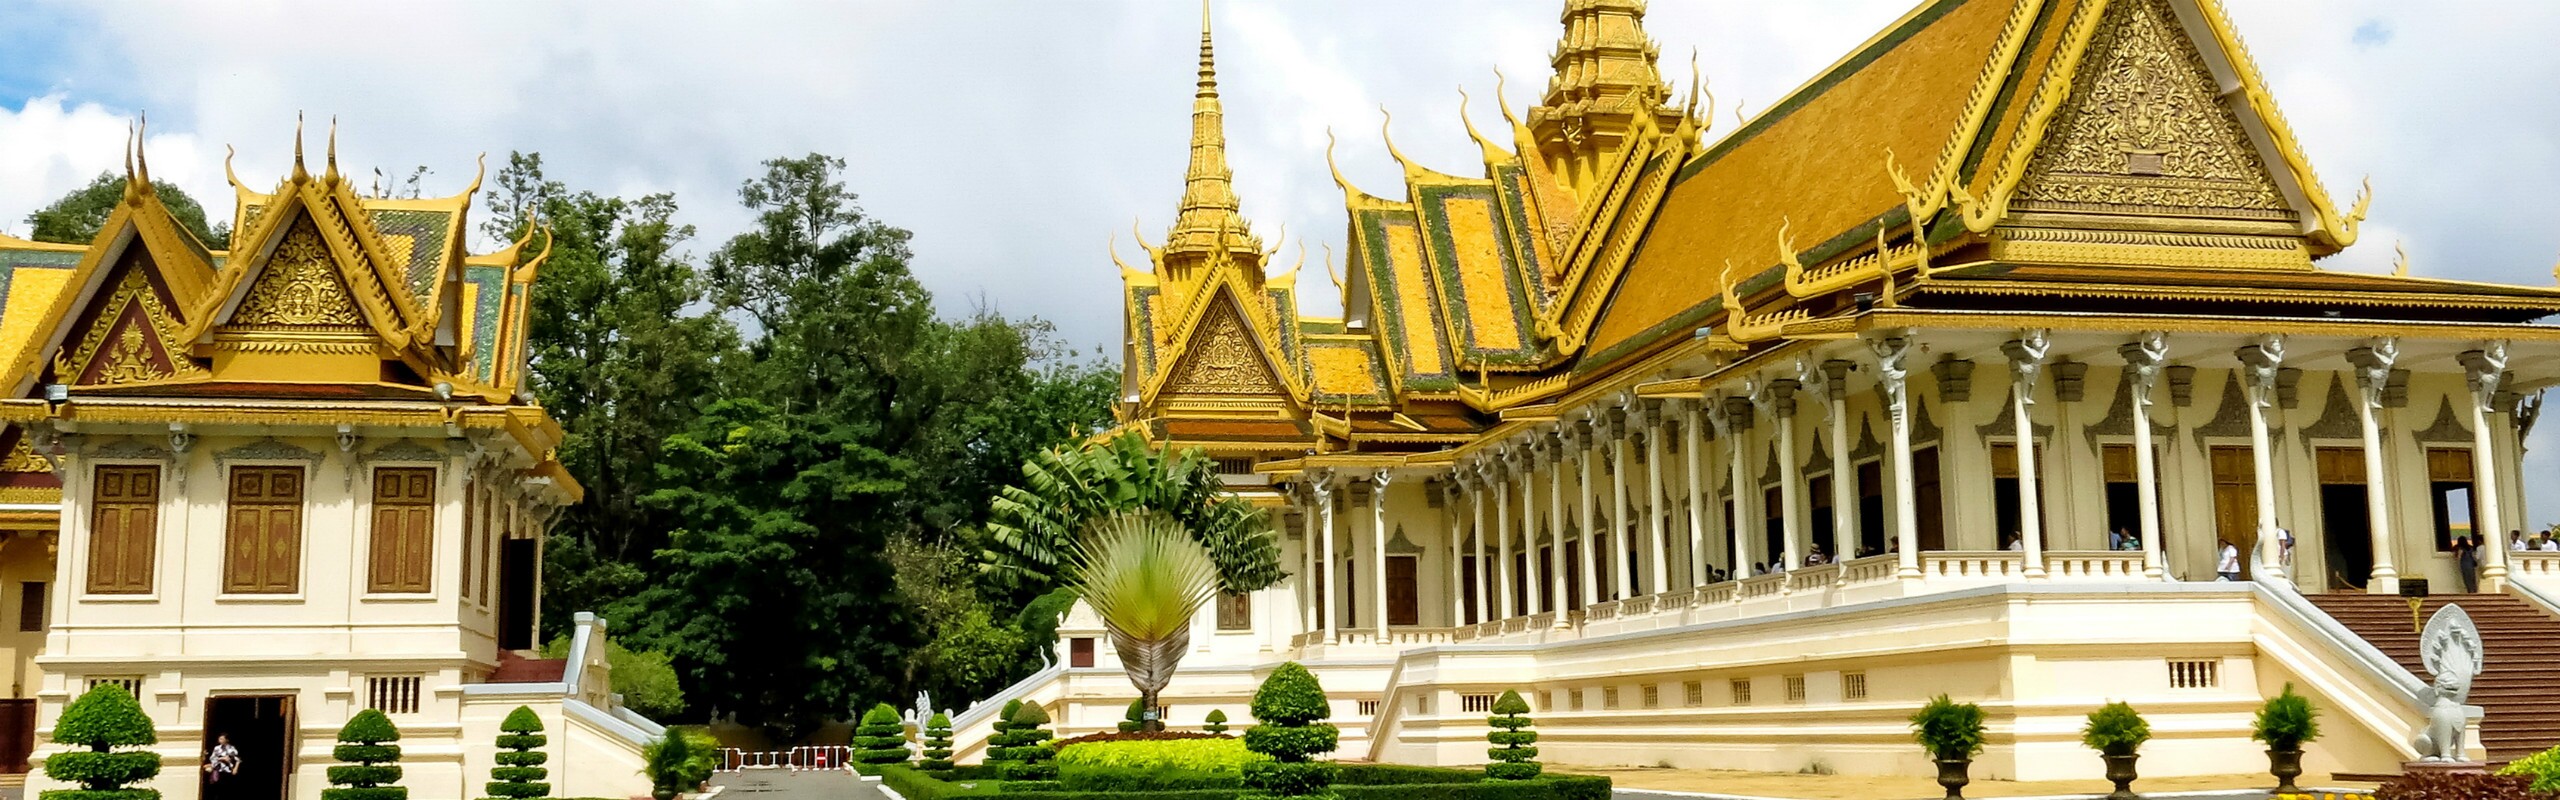 Top Attractions in Phnom Penh 